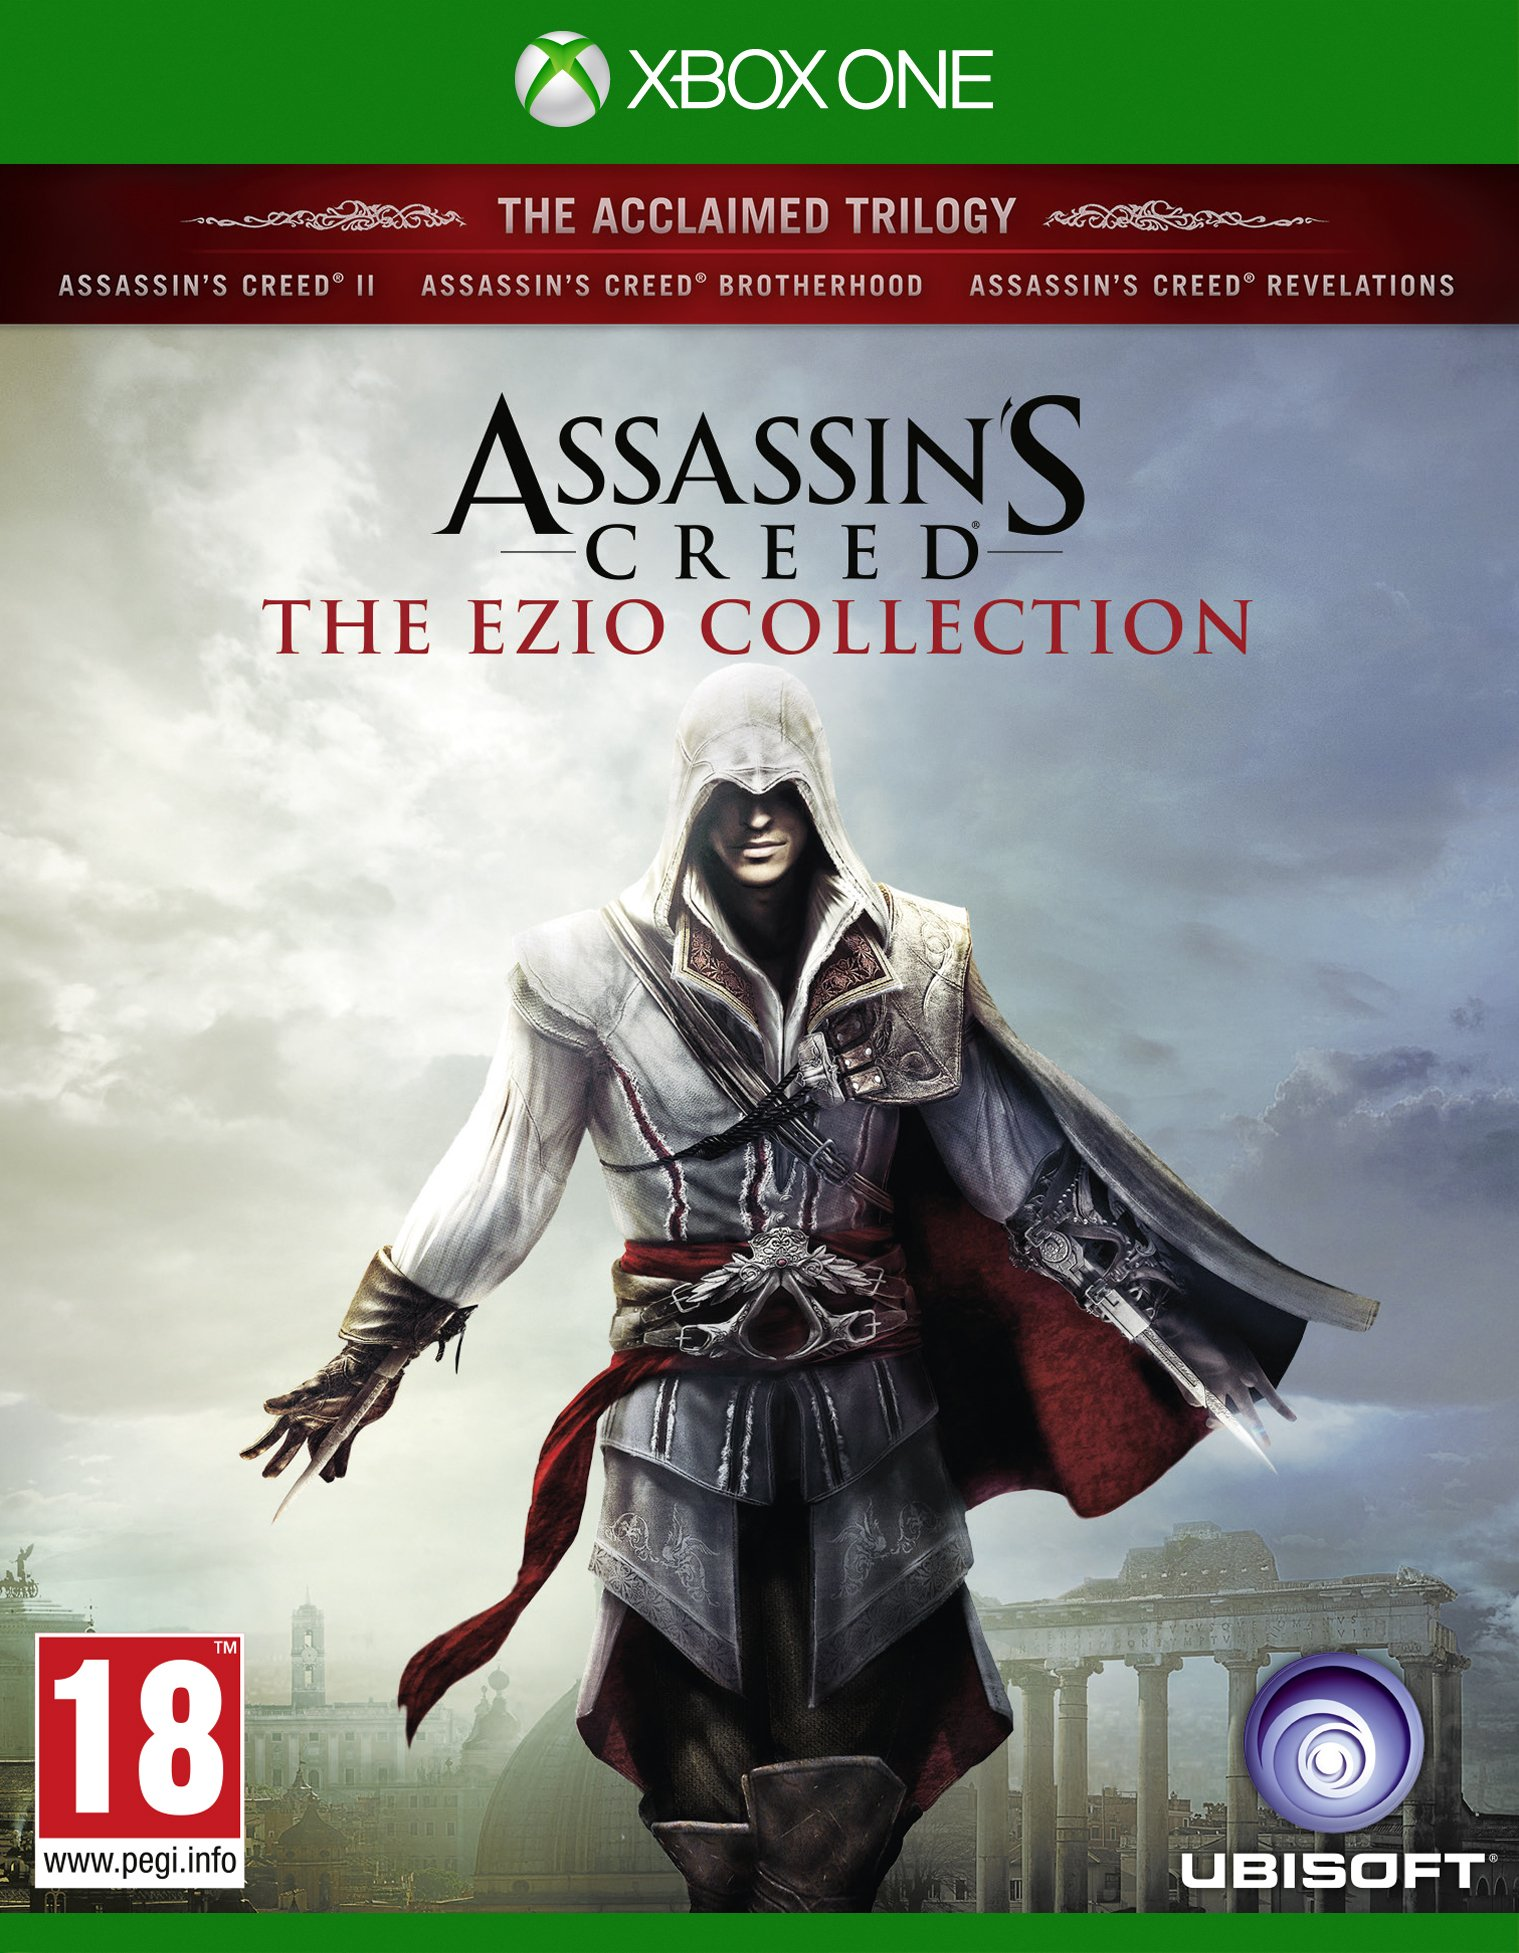 Игра Assassin's Creed The Ezio Collection для Xbox One/Series X|S, Русский язык, электронный ключ Аргентина